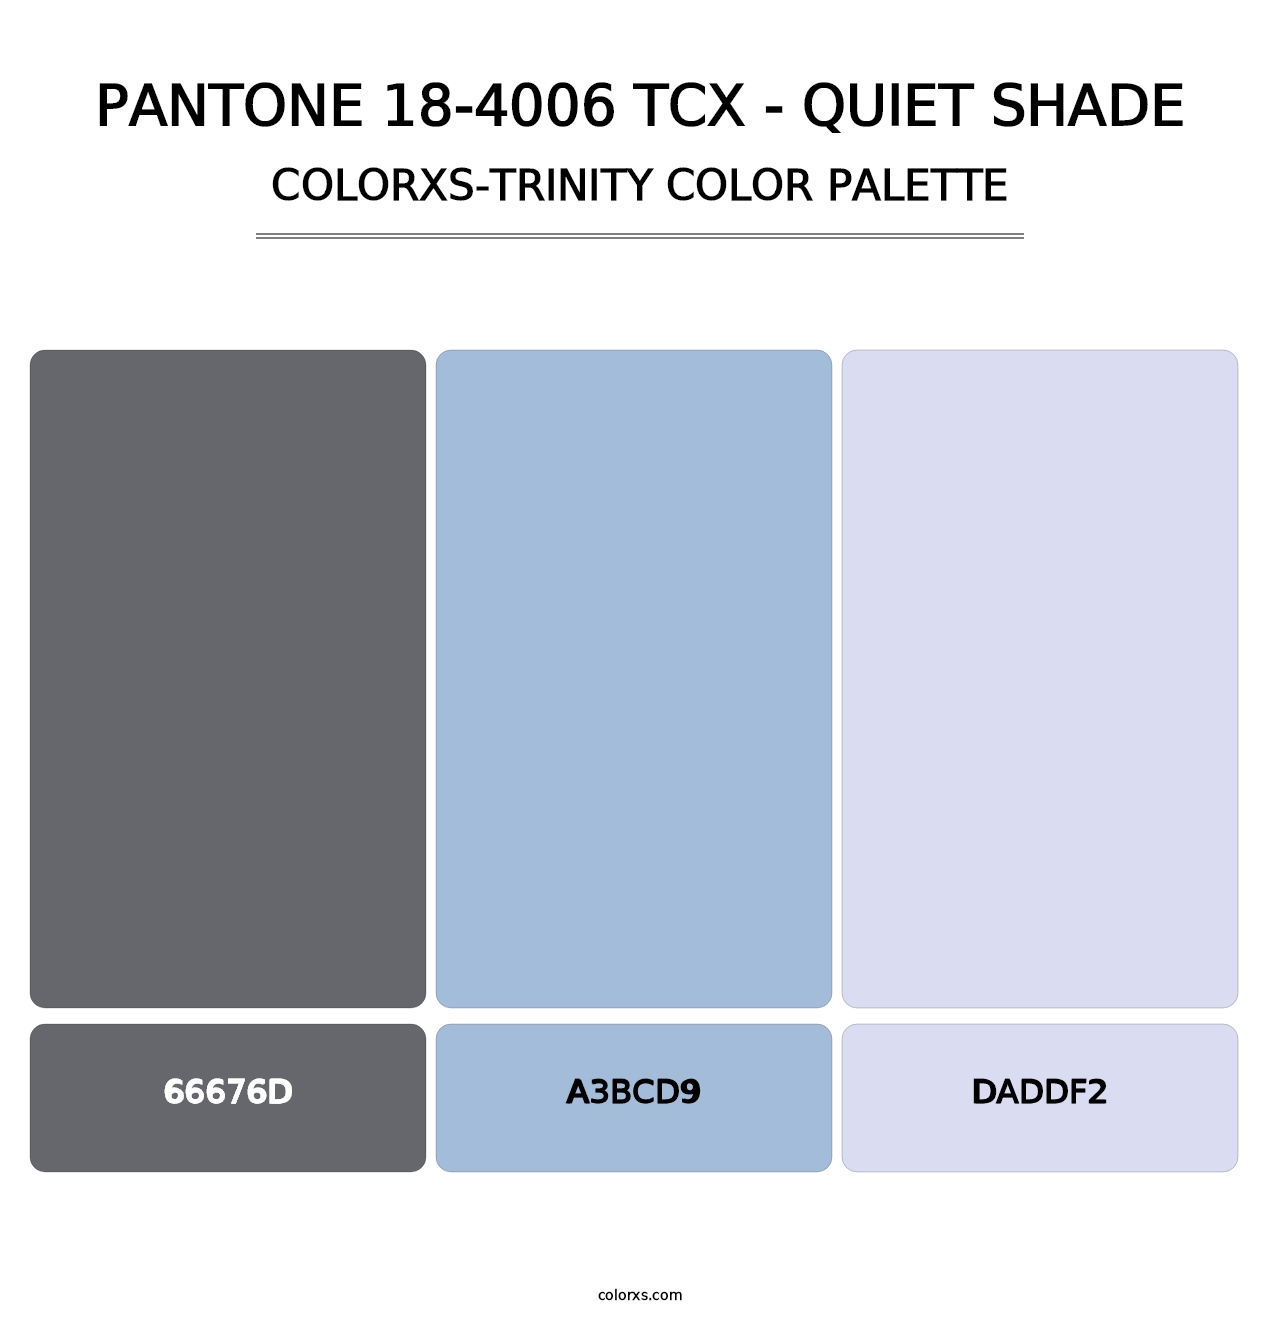 PANTONE 18-4006 TCX - Quiet Shade - Colorxs Trinity Palette